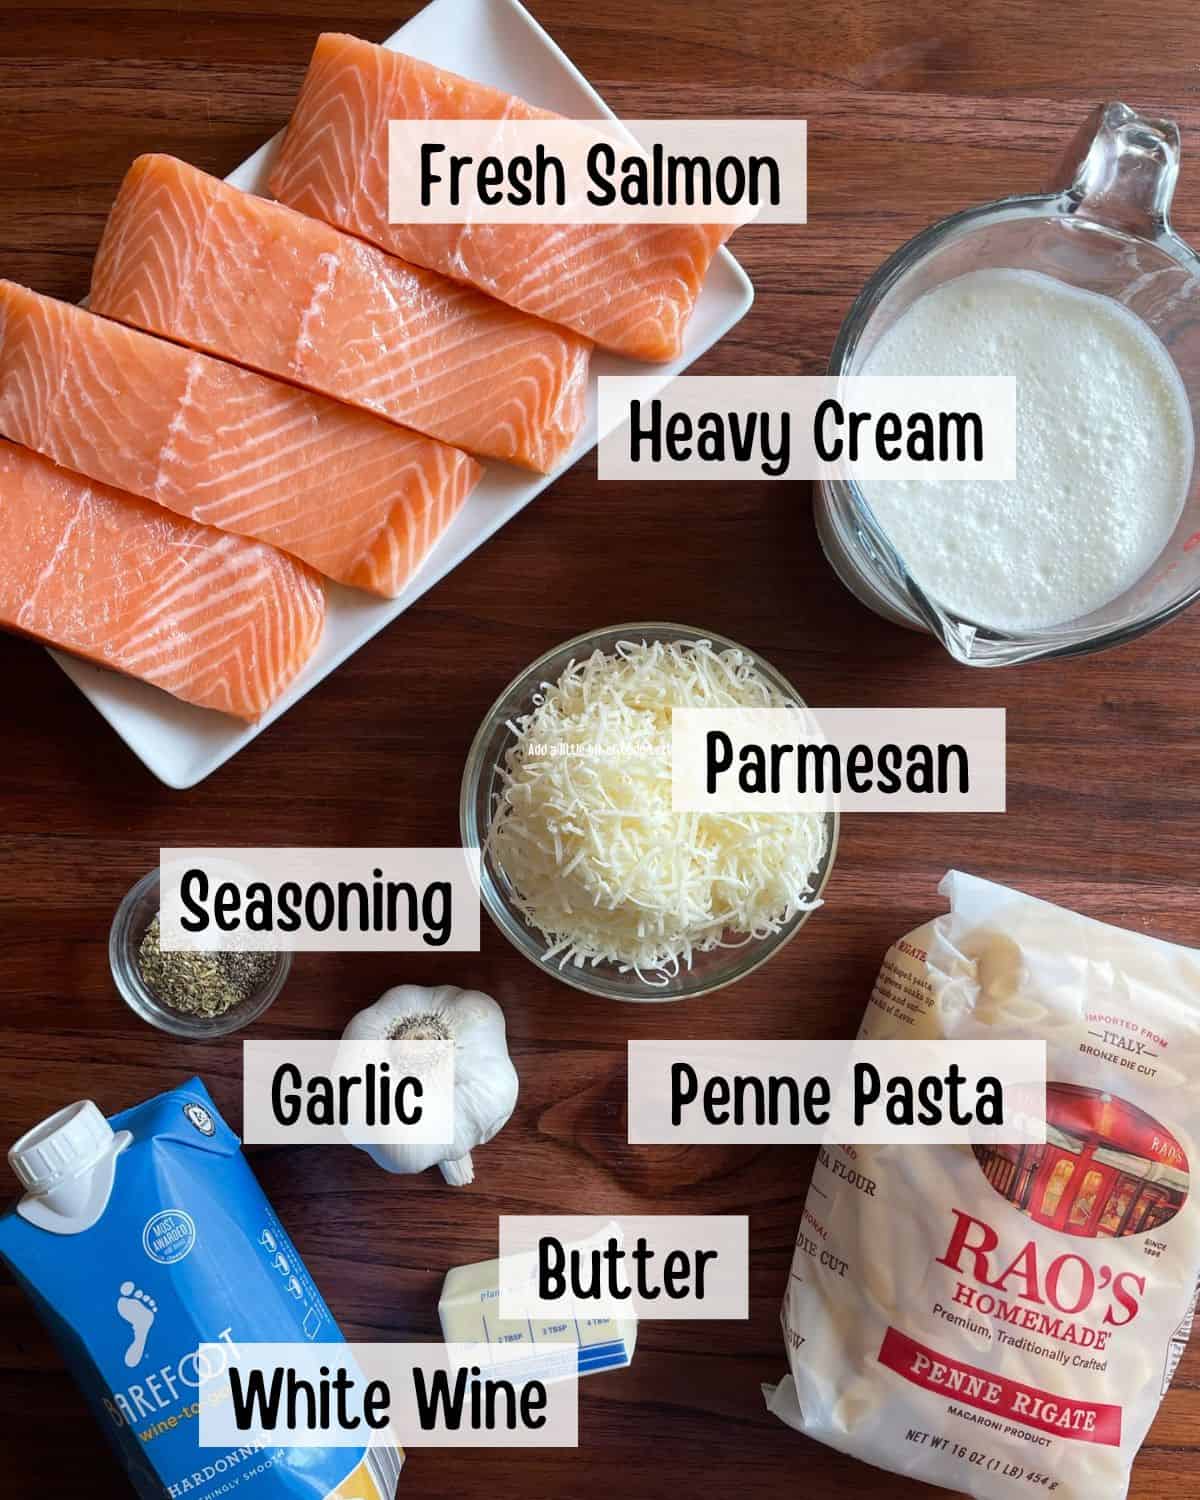 Ingredients needed to make Penne al Salmone.